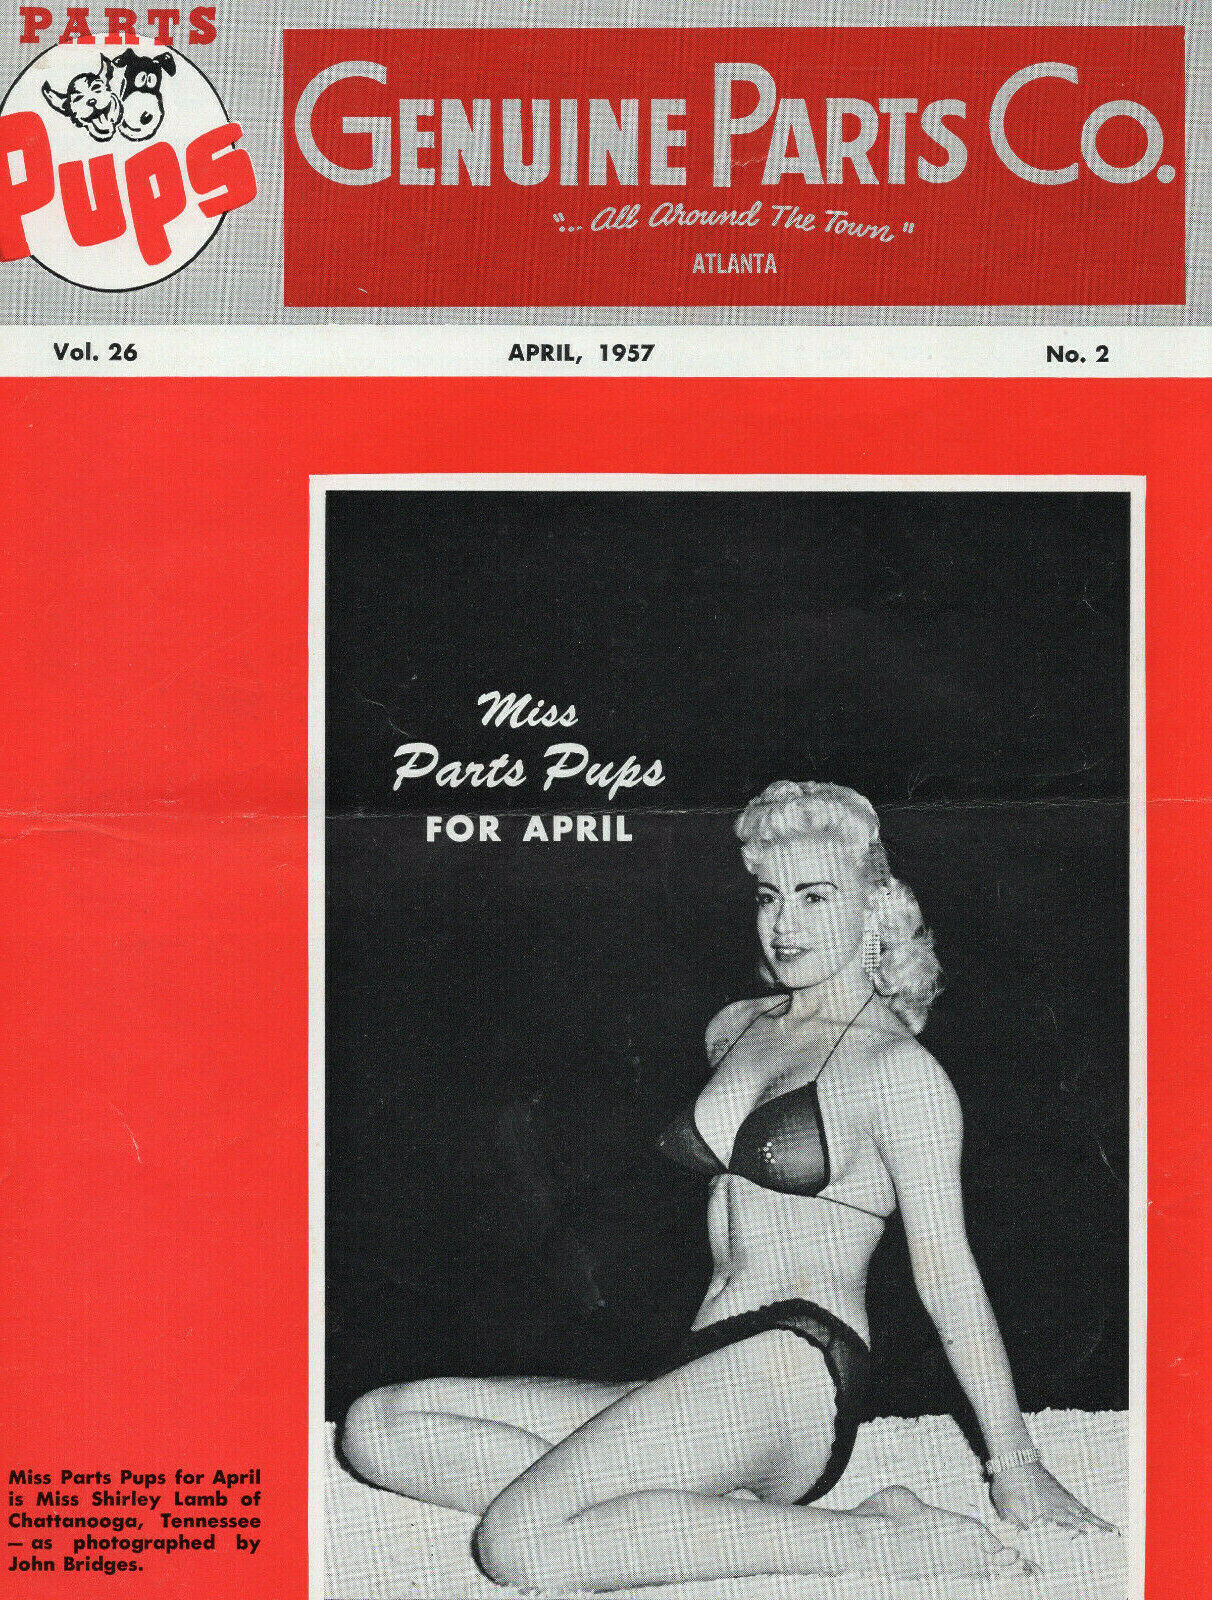 Vintage NAPA Standard Parts Pups April 1957 Magazine Issue (Atlanta) Vol 26 No 2